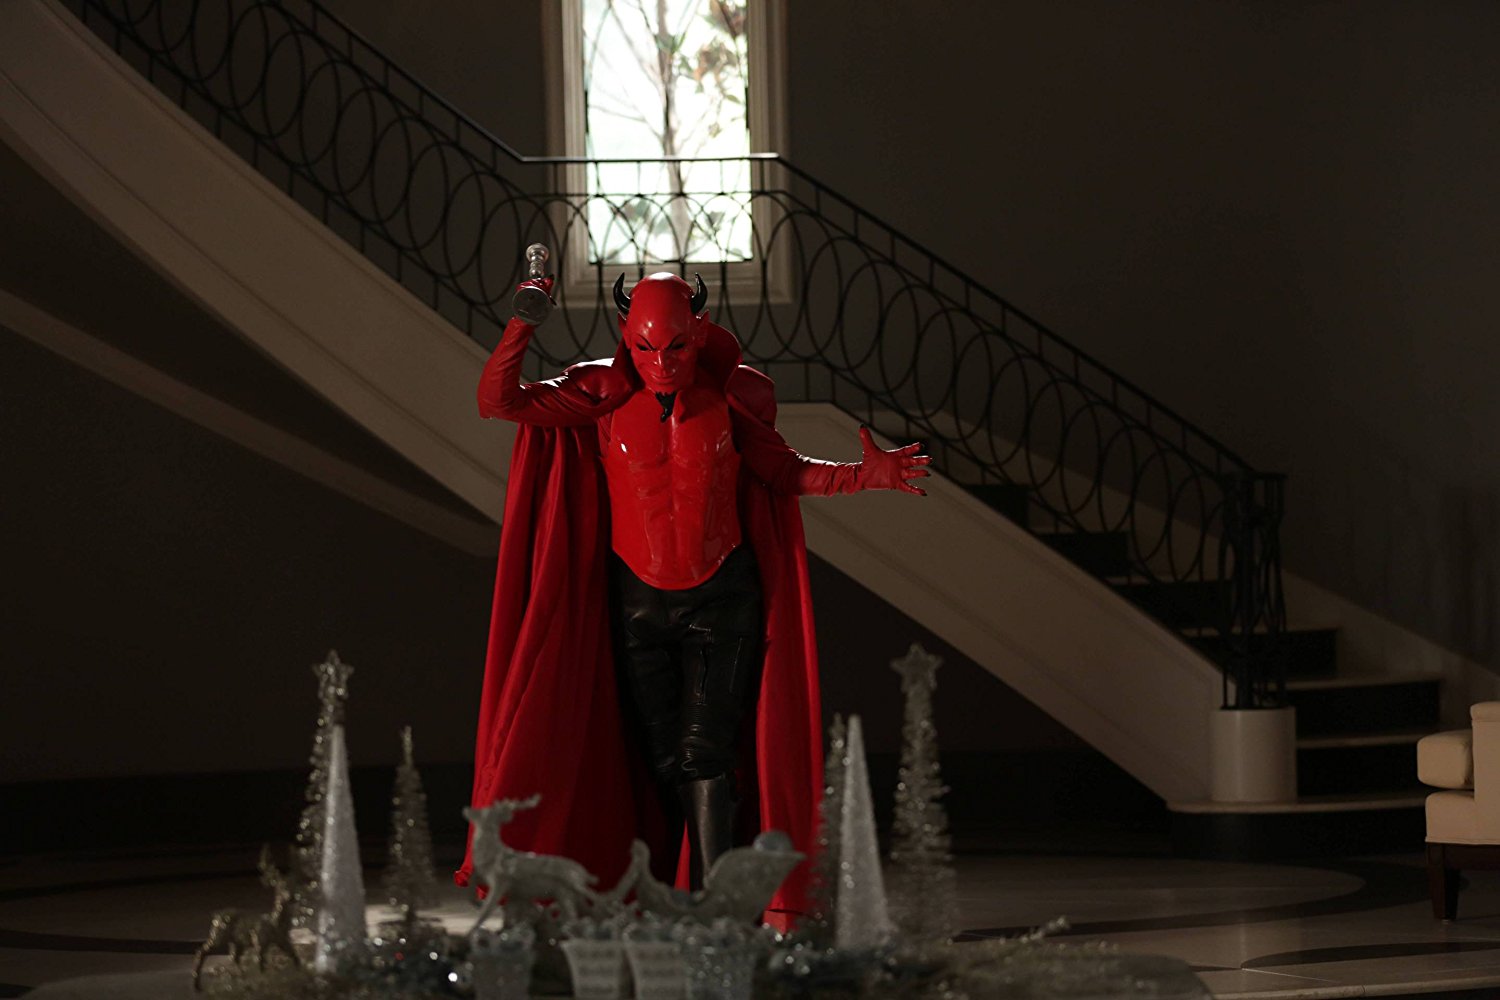 Red Devil